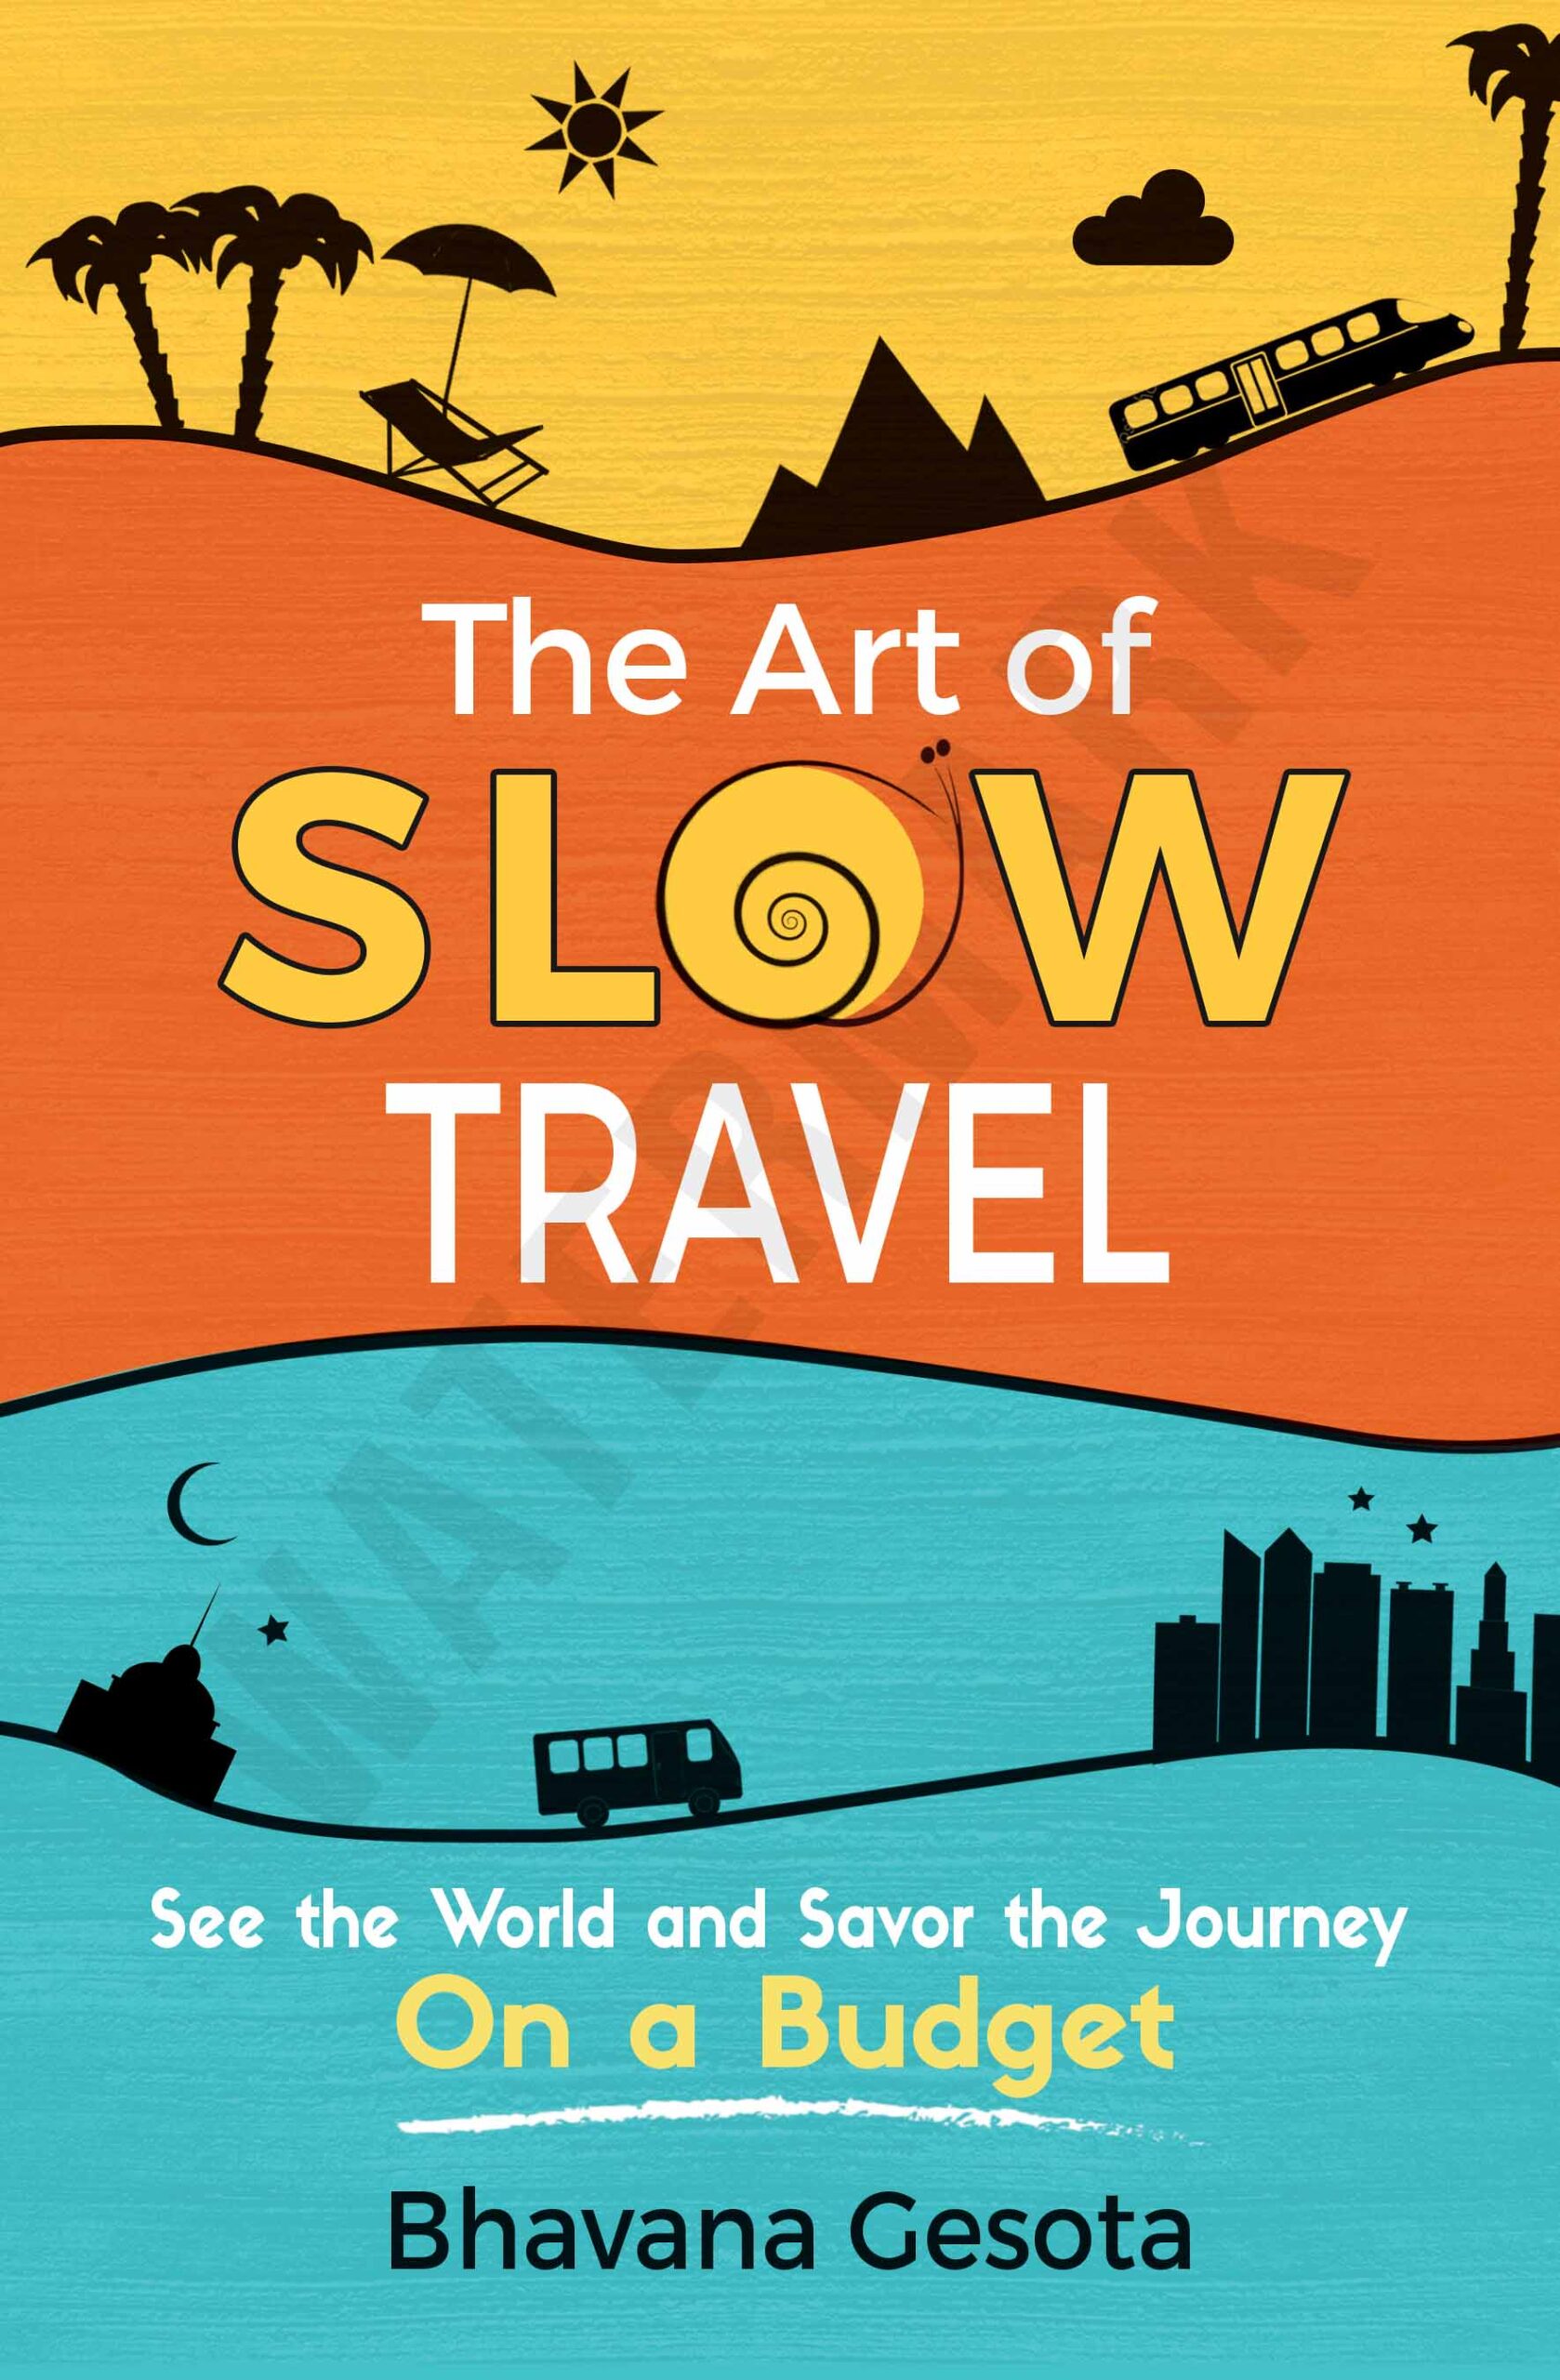 FREE: The Art of Slow Travel by Bhavana Gesota